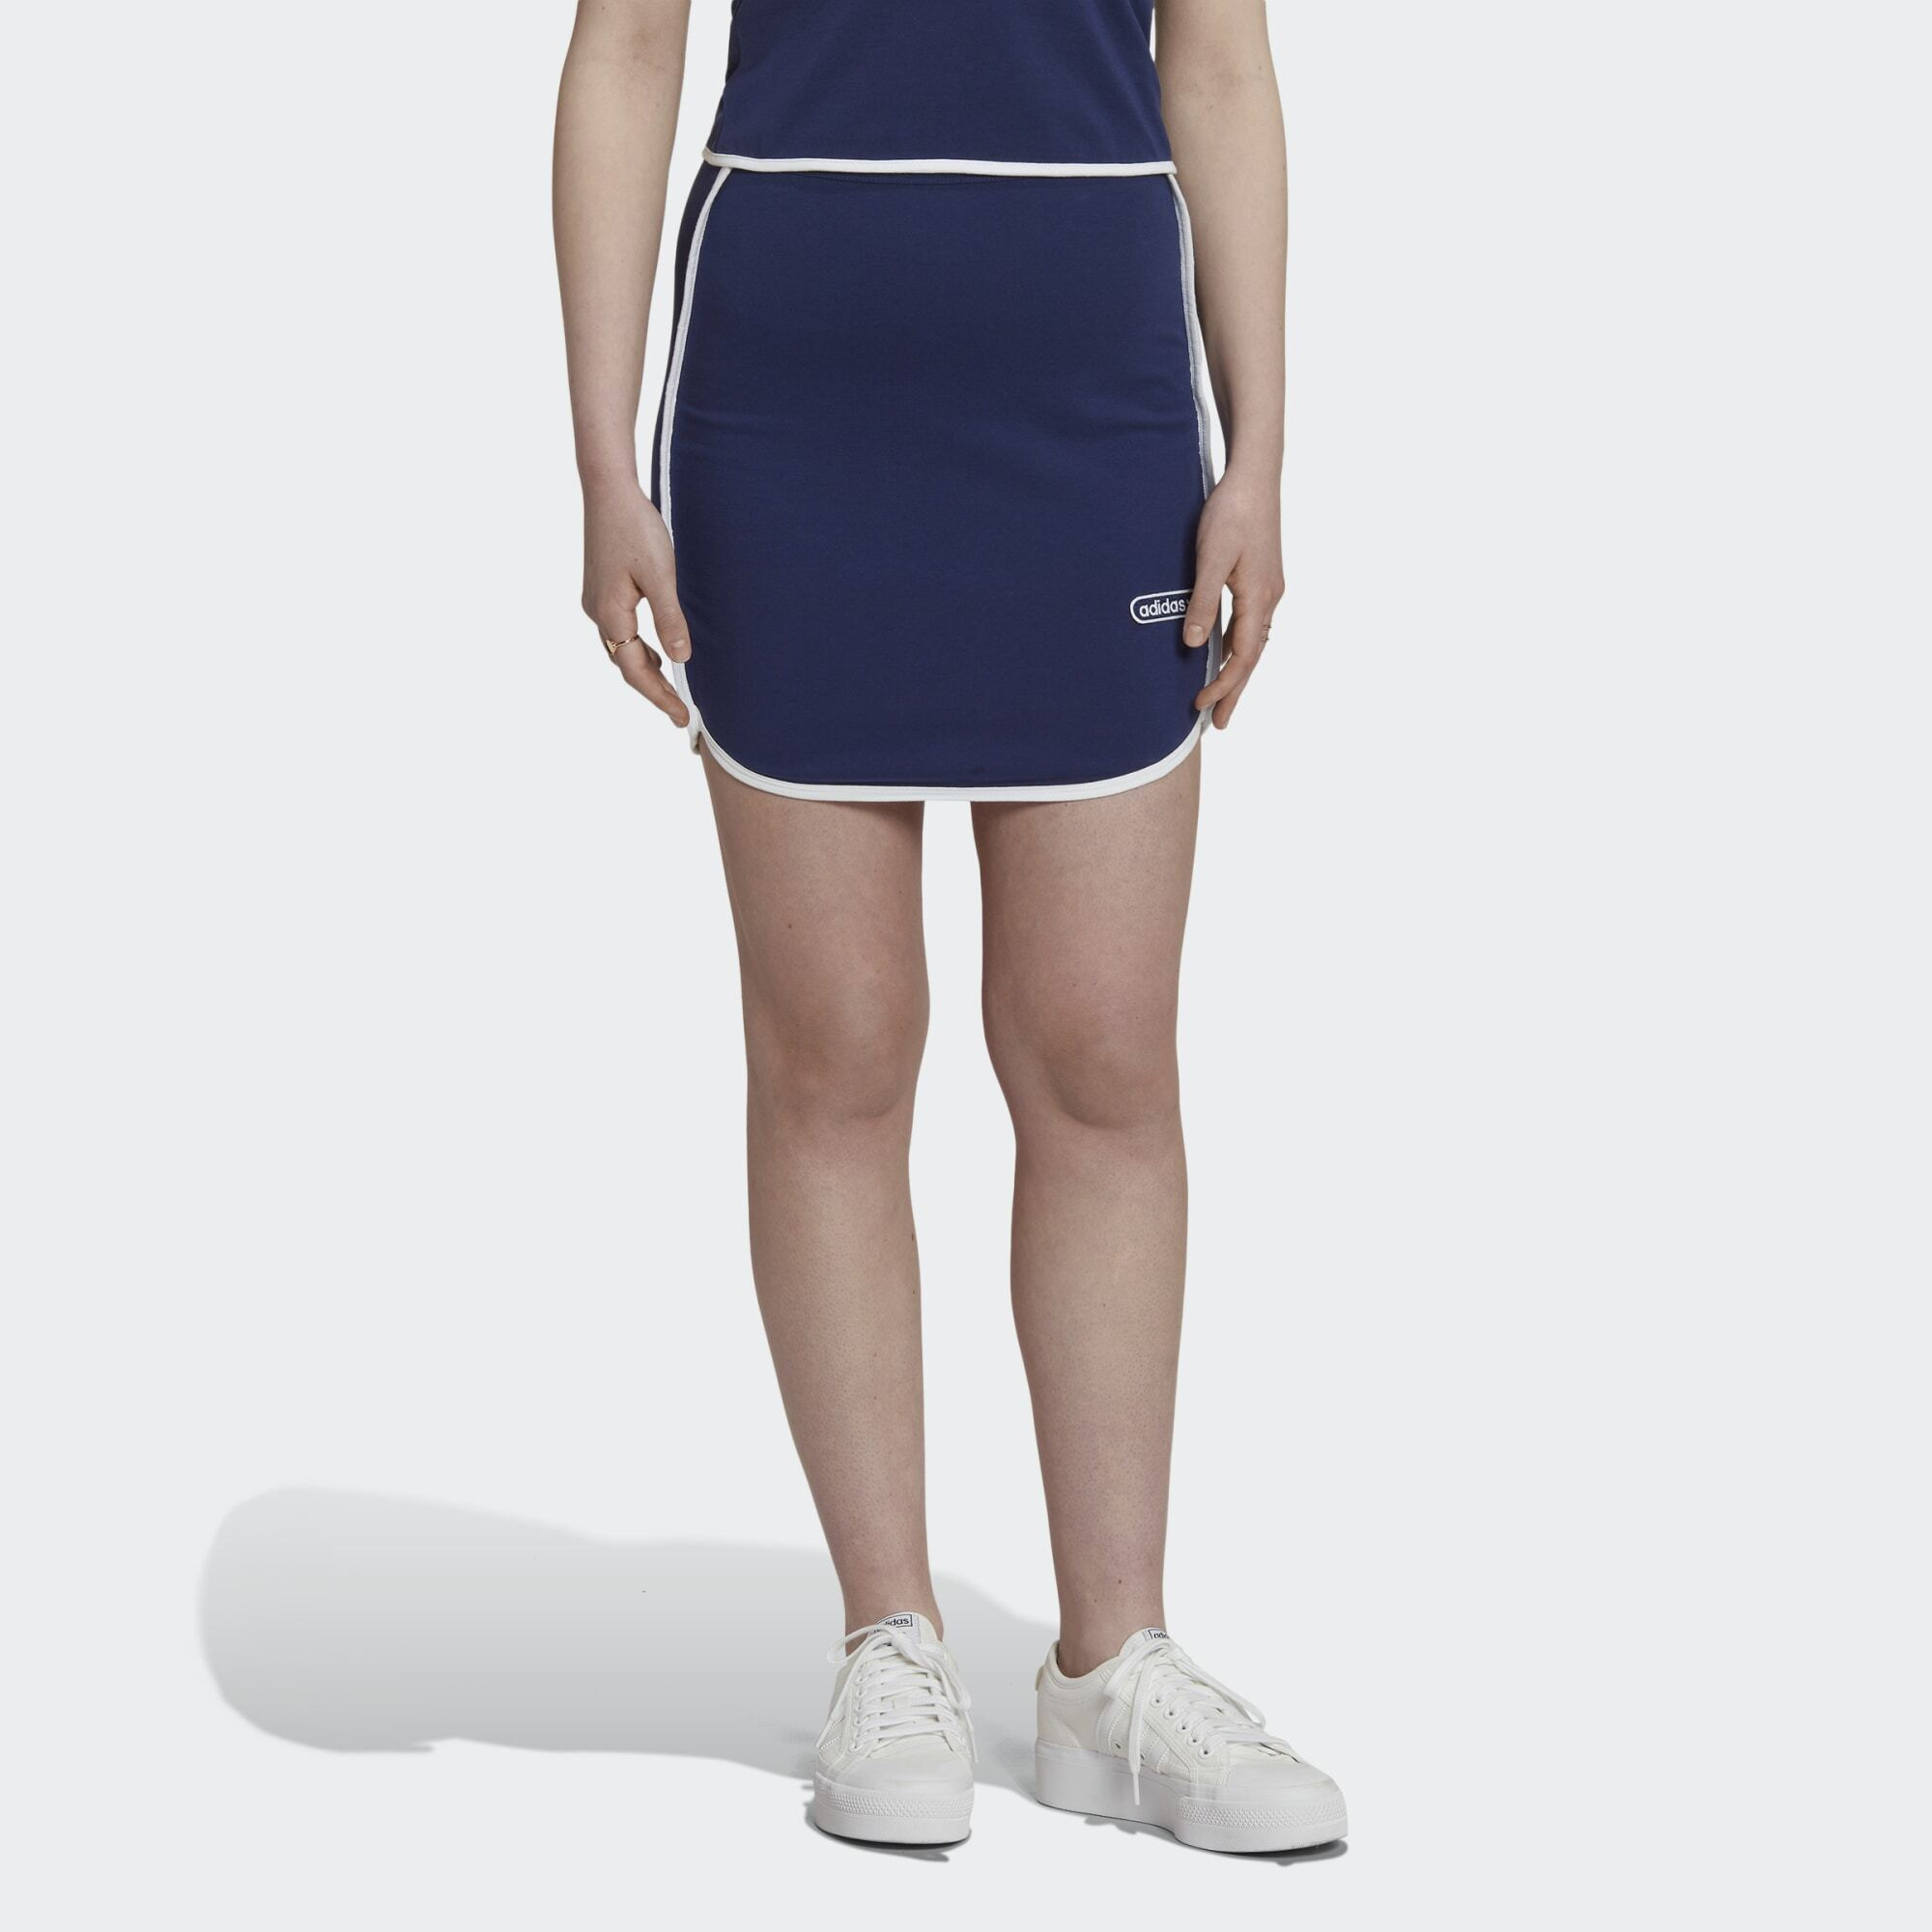 adidas Originals Mini Skirt With Binding Details (9000121706_3024)